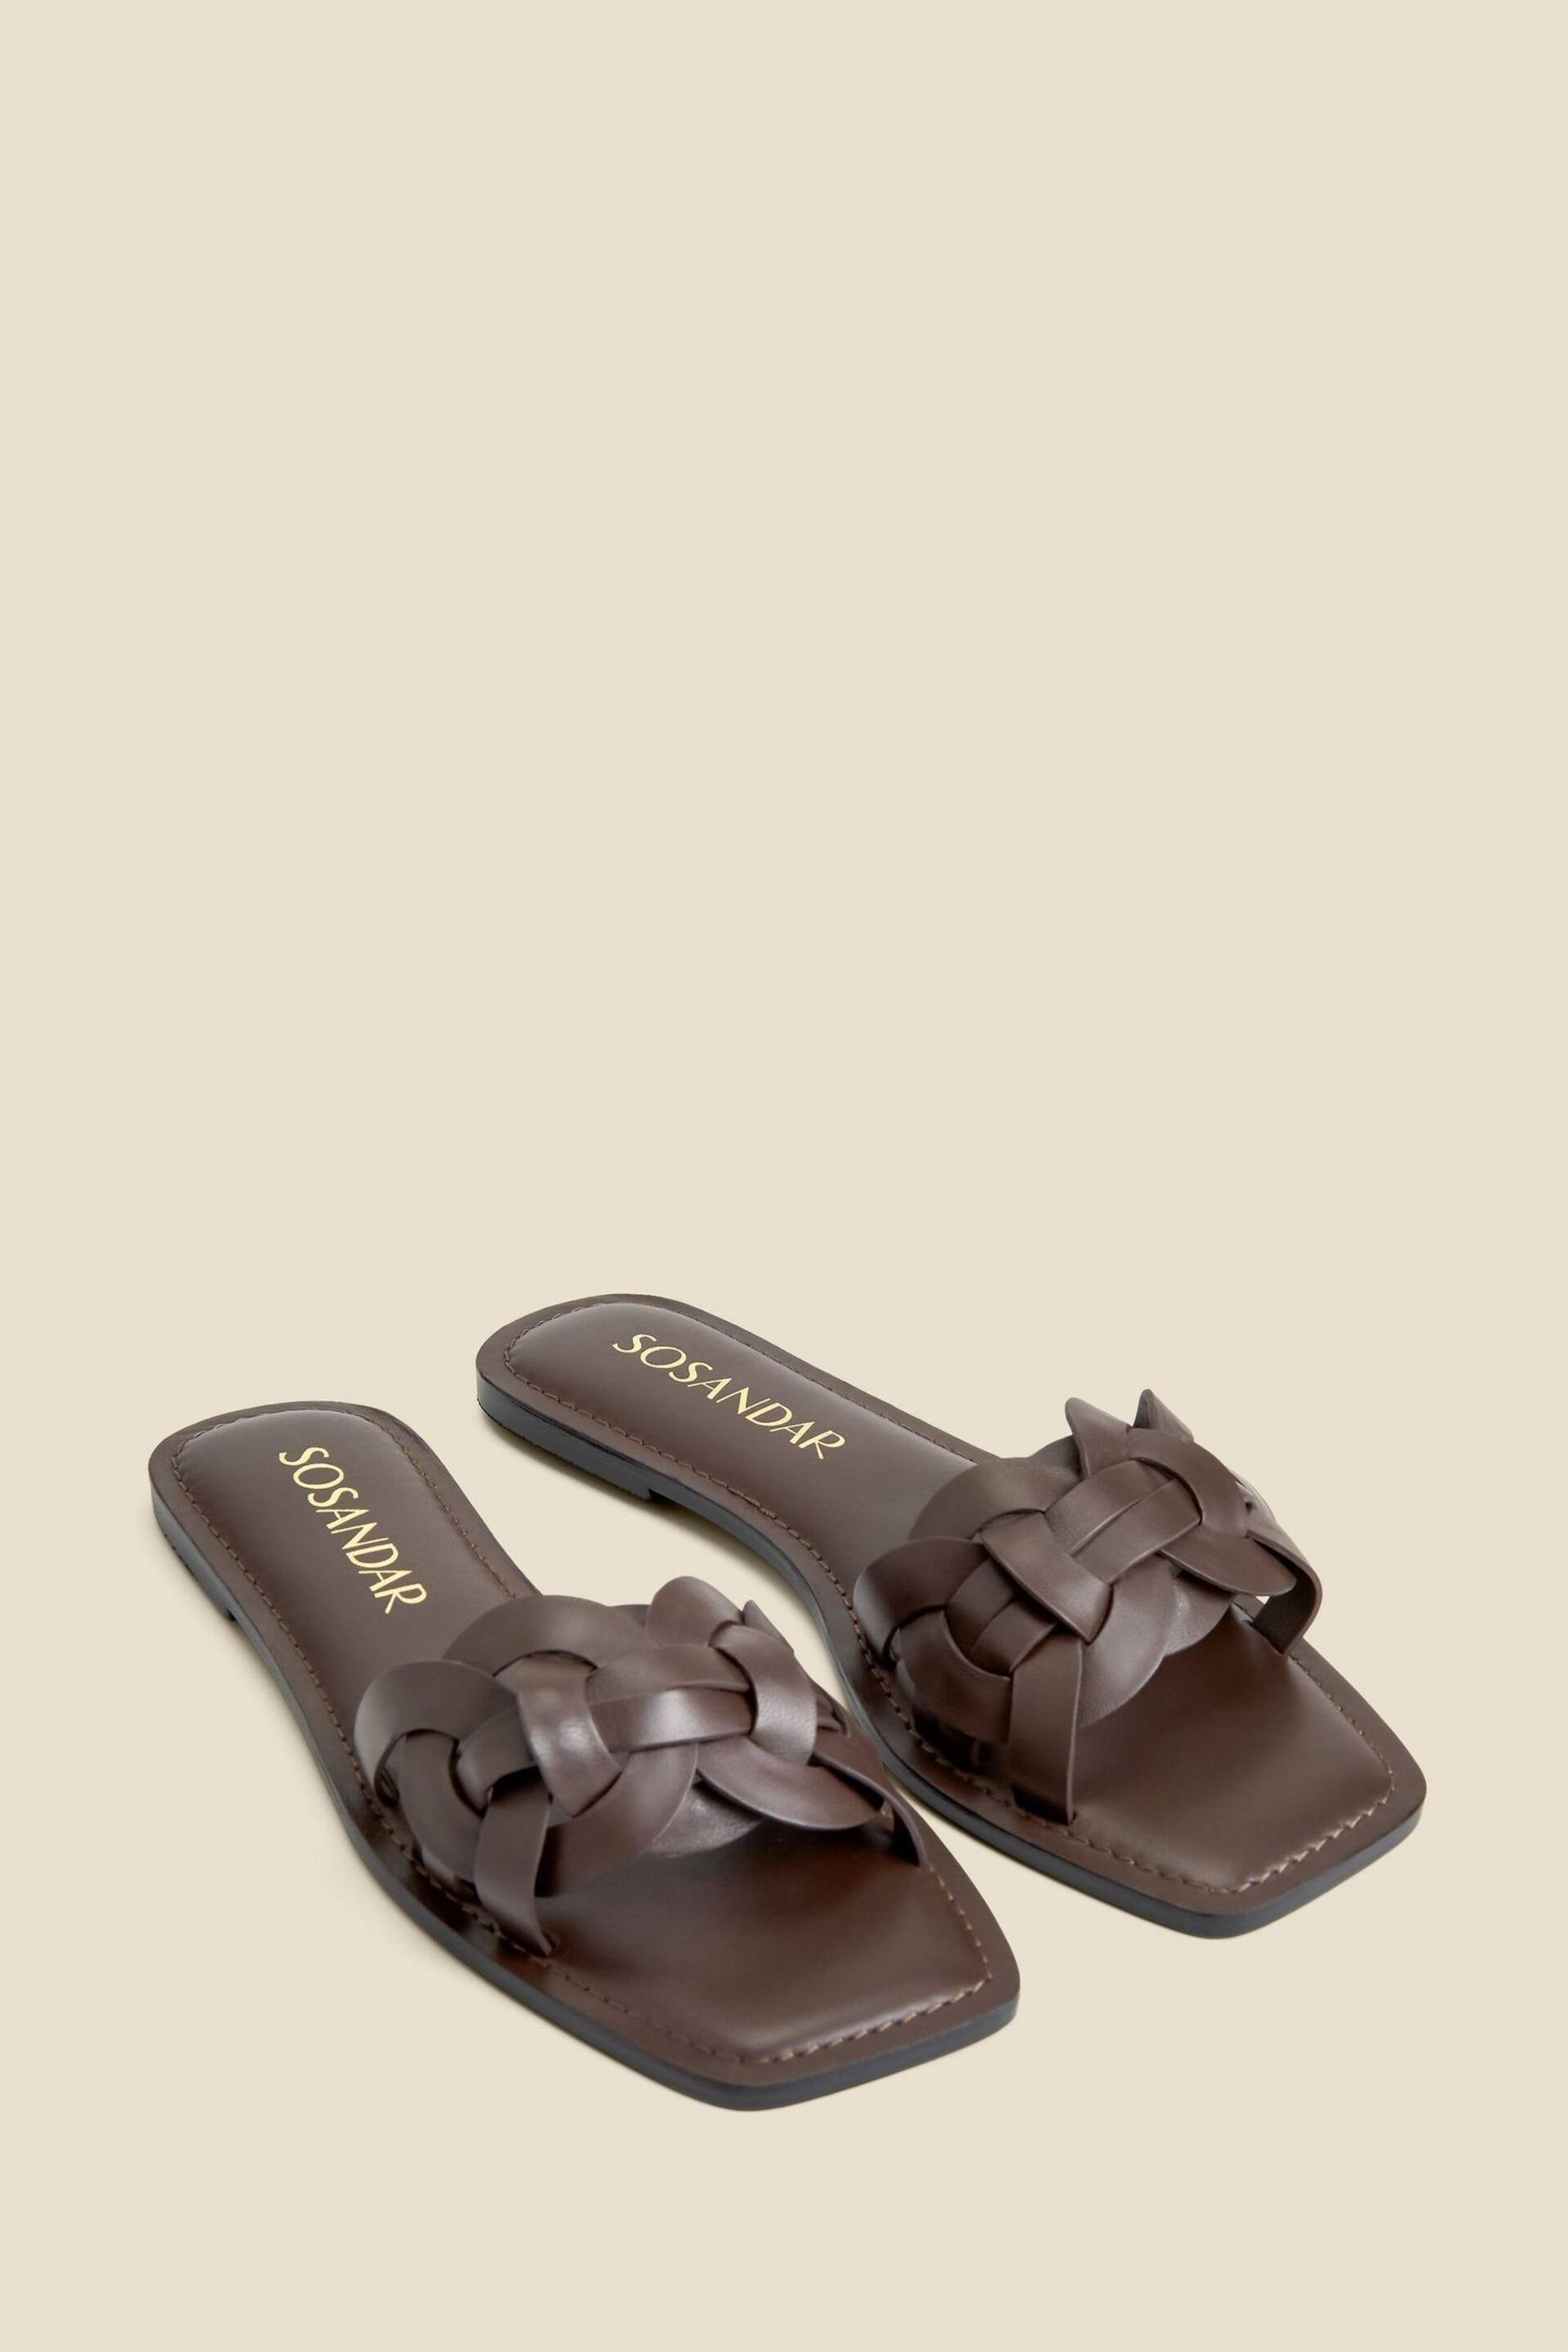 Sosandar Brown Leather Woven Strap Sandals - Image 1 of 3